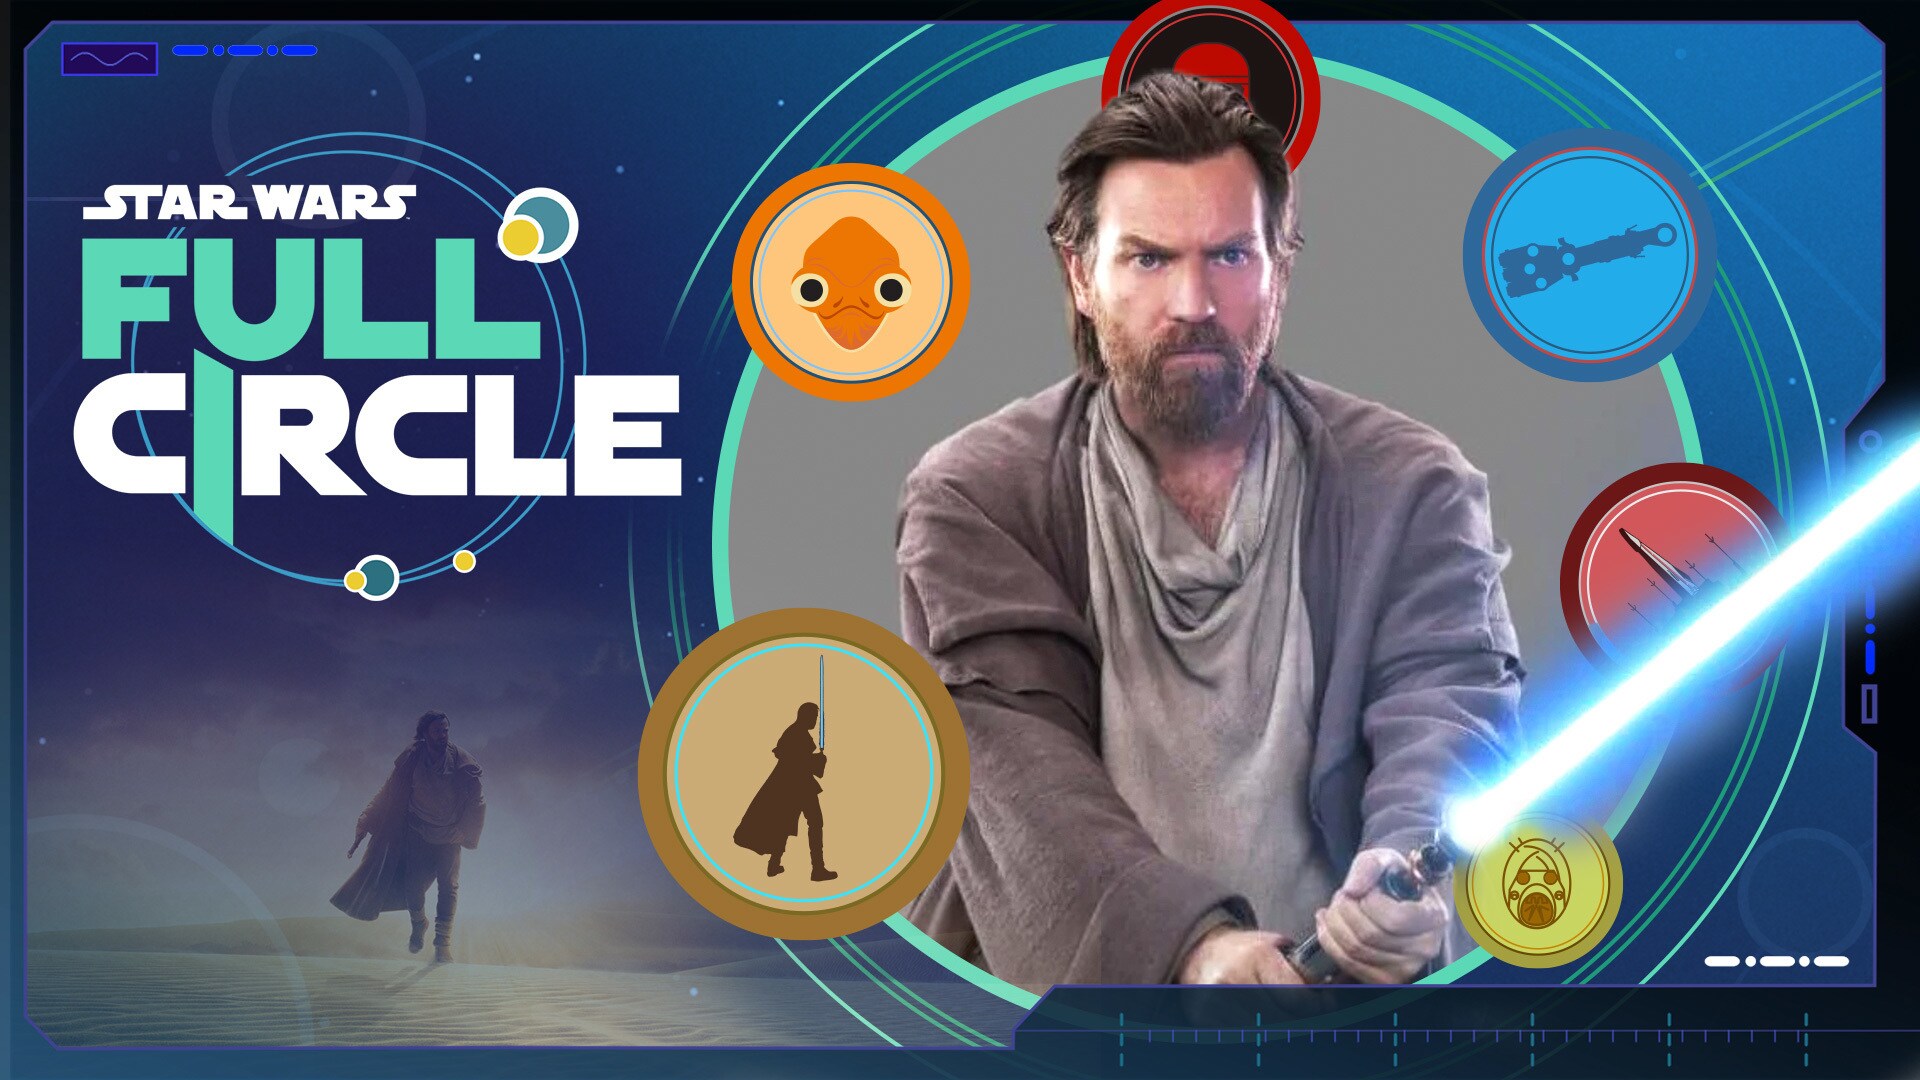 Obi-Wan Kenobi | Star Wars Full Circle